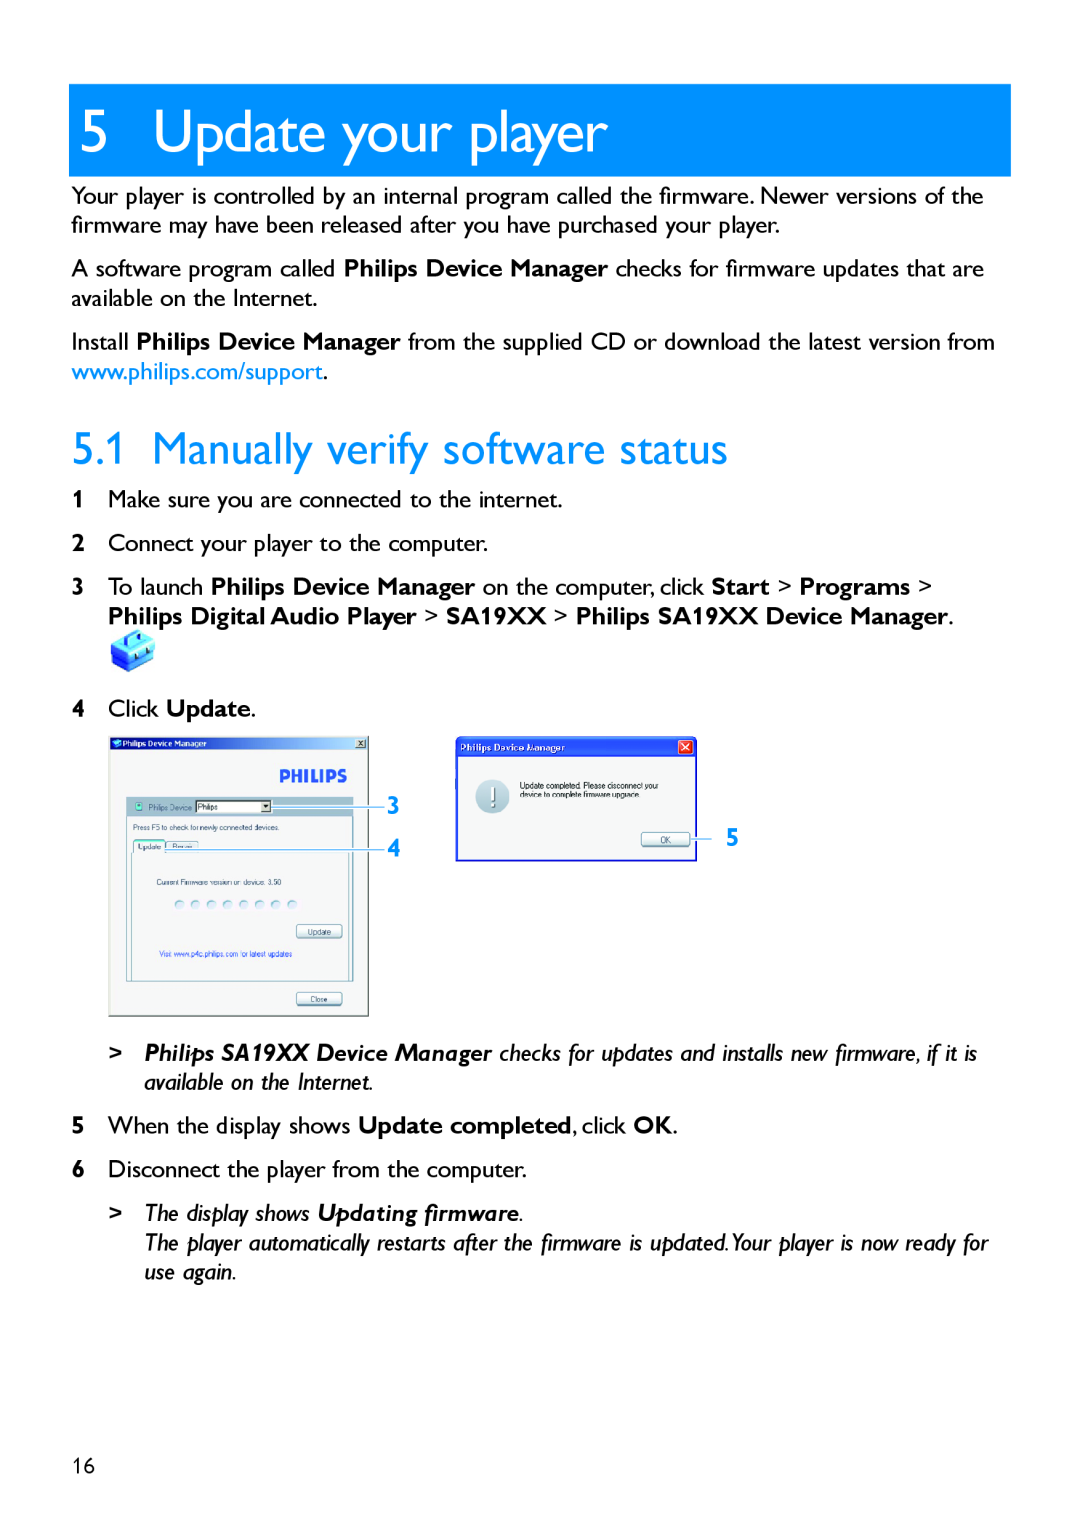 Philips SA1917, SA1919, SA1916 Update your player, Manually verify software status, The display shows Updating firmware 